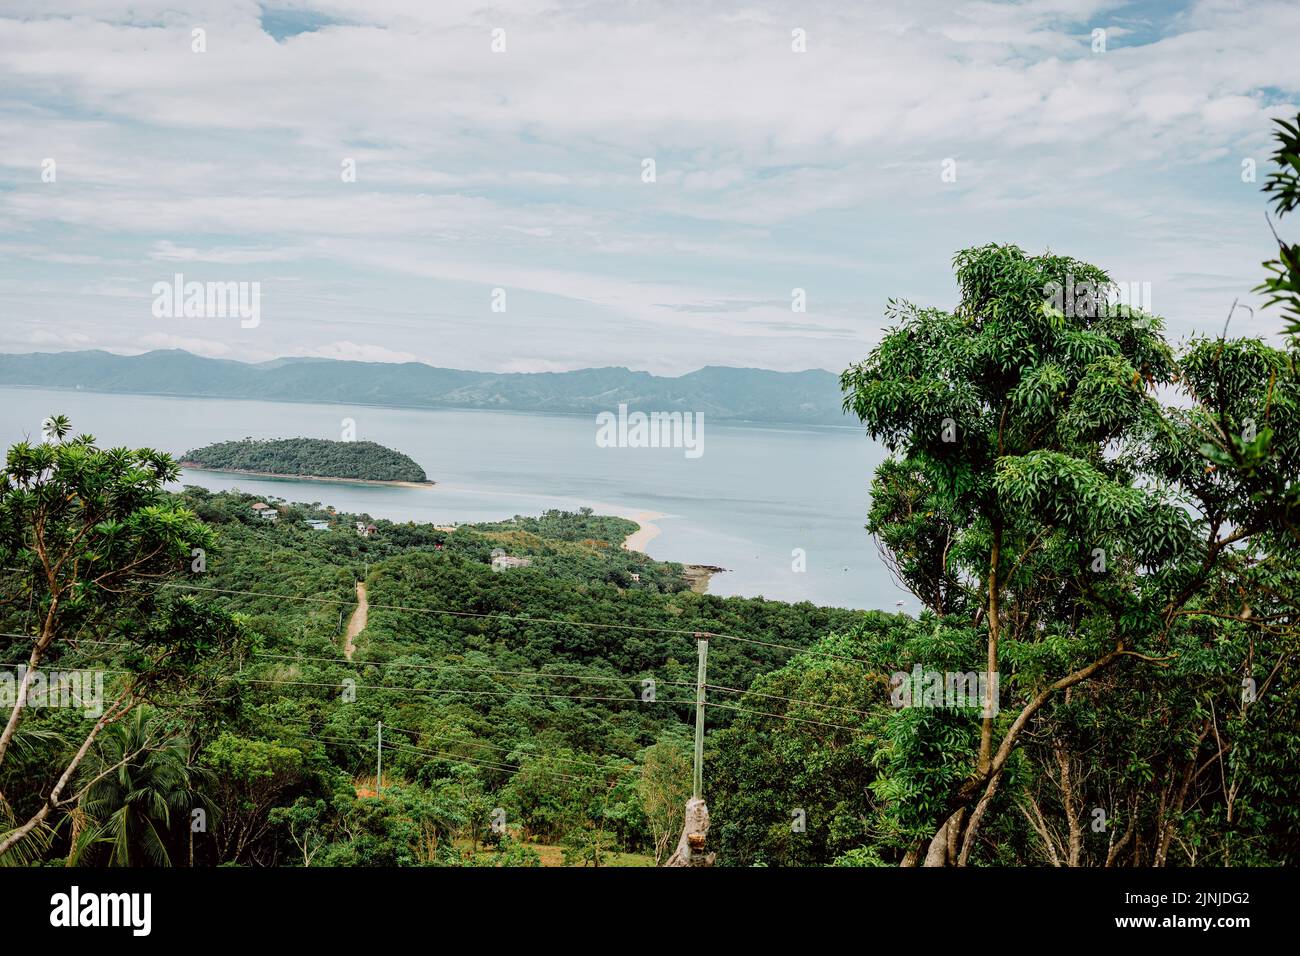 The beautiful view of the green island and sea. Bon Bon Beach, Romblon, Philippines. Stock Photo